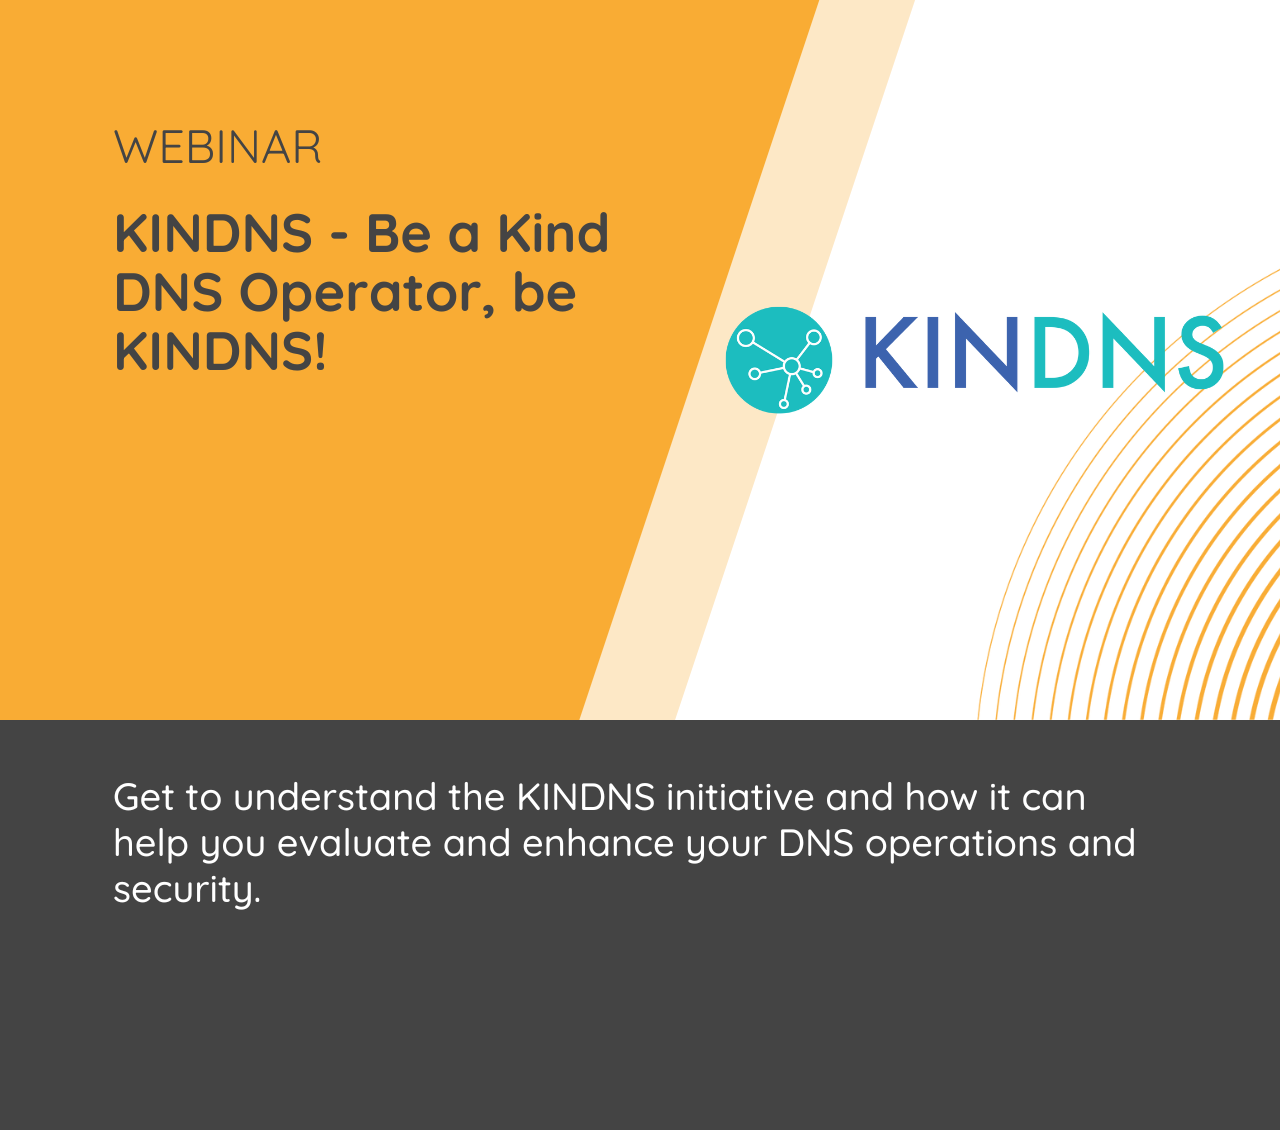 KINDNS - Be a Kind DNS Operator, be KINDNS!